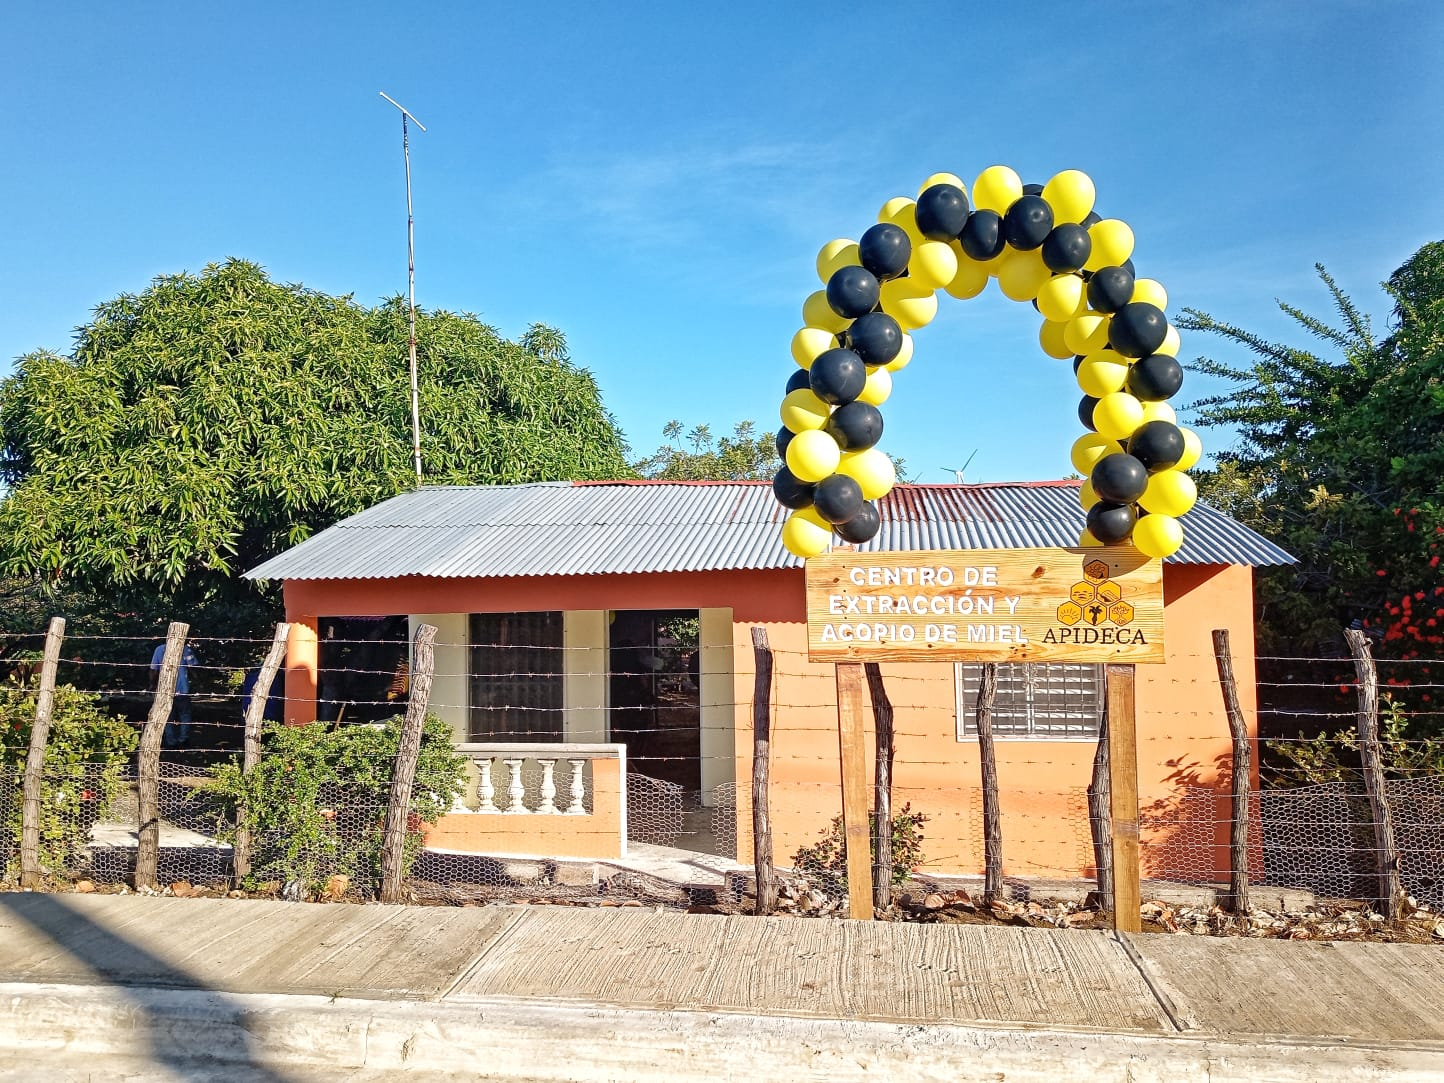 A building with a yellow and black balloon arch and a sign that reads "Centro de extracion y acopio de miel"